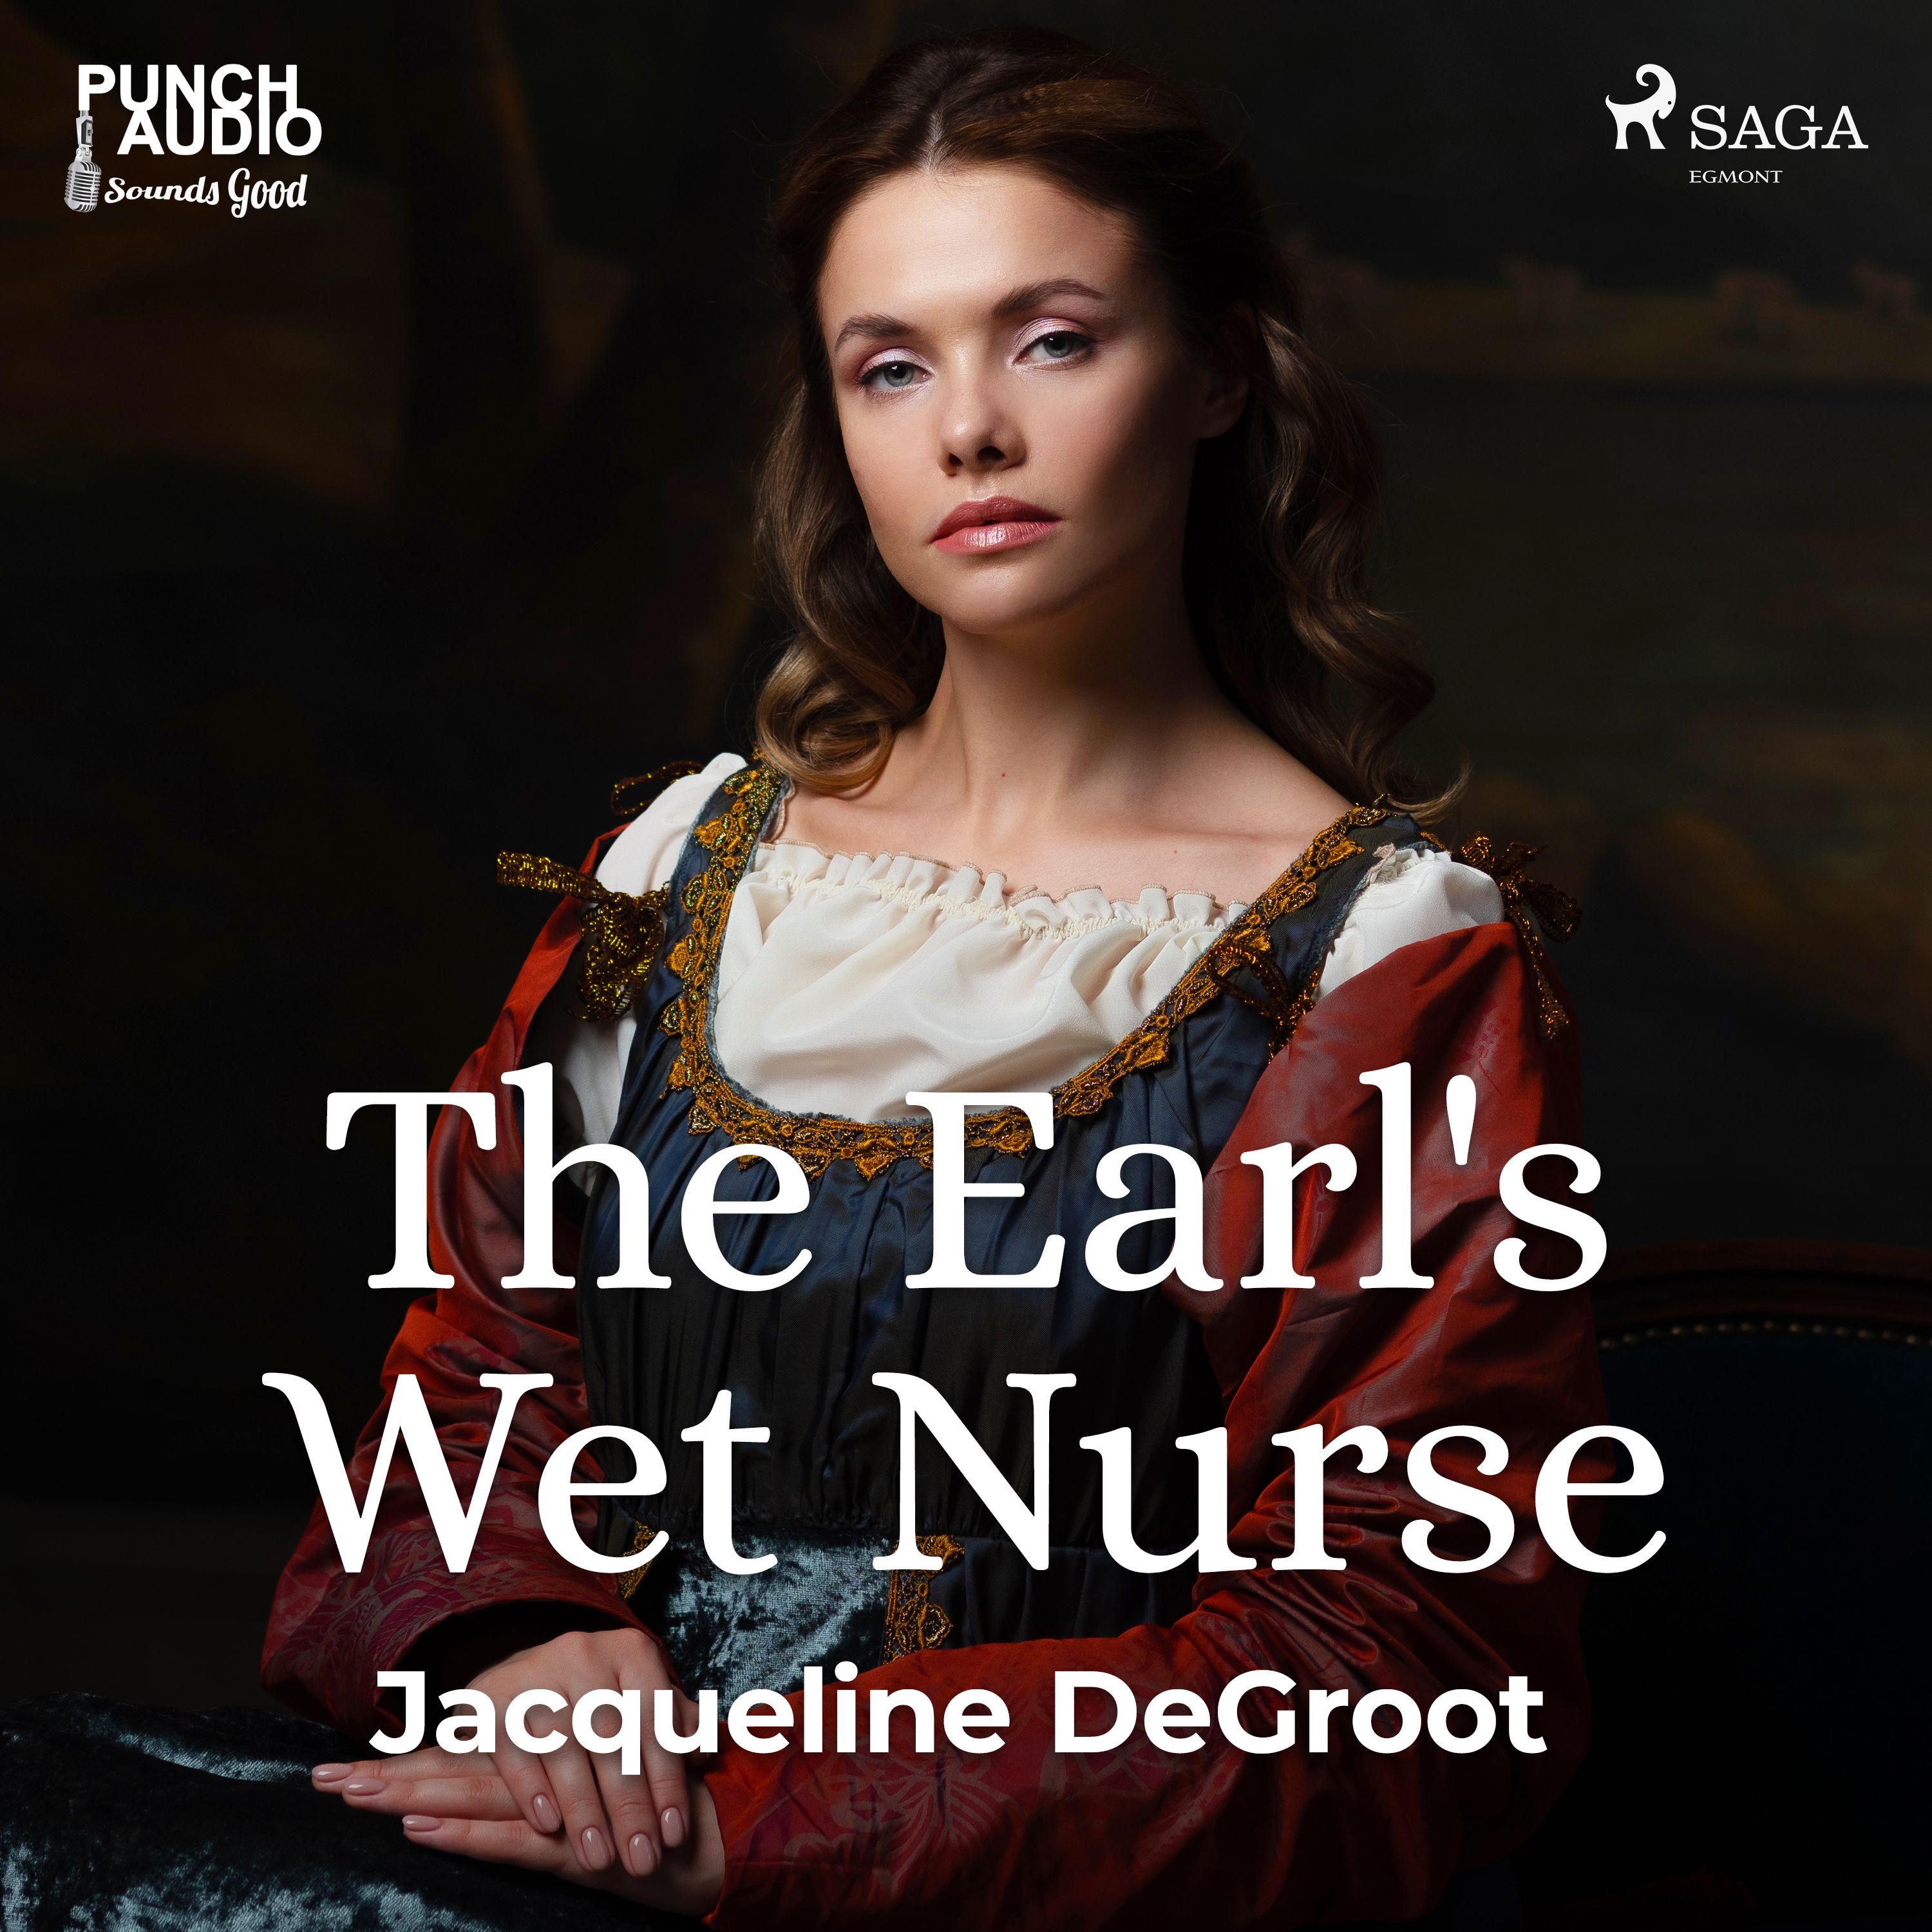 The Earl's Wet Nurse, ljudbok av Jacqueline Degroot